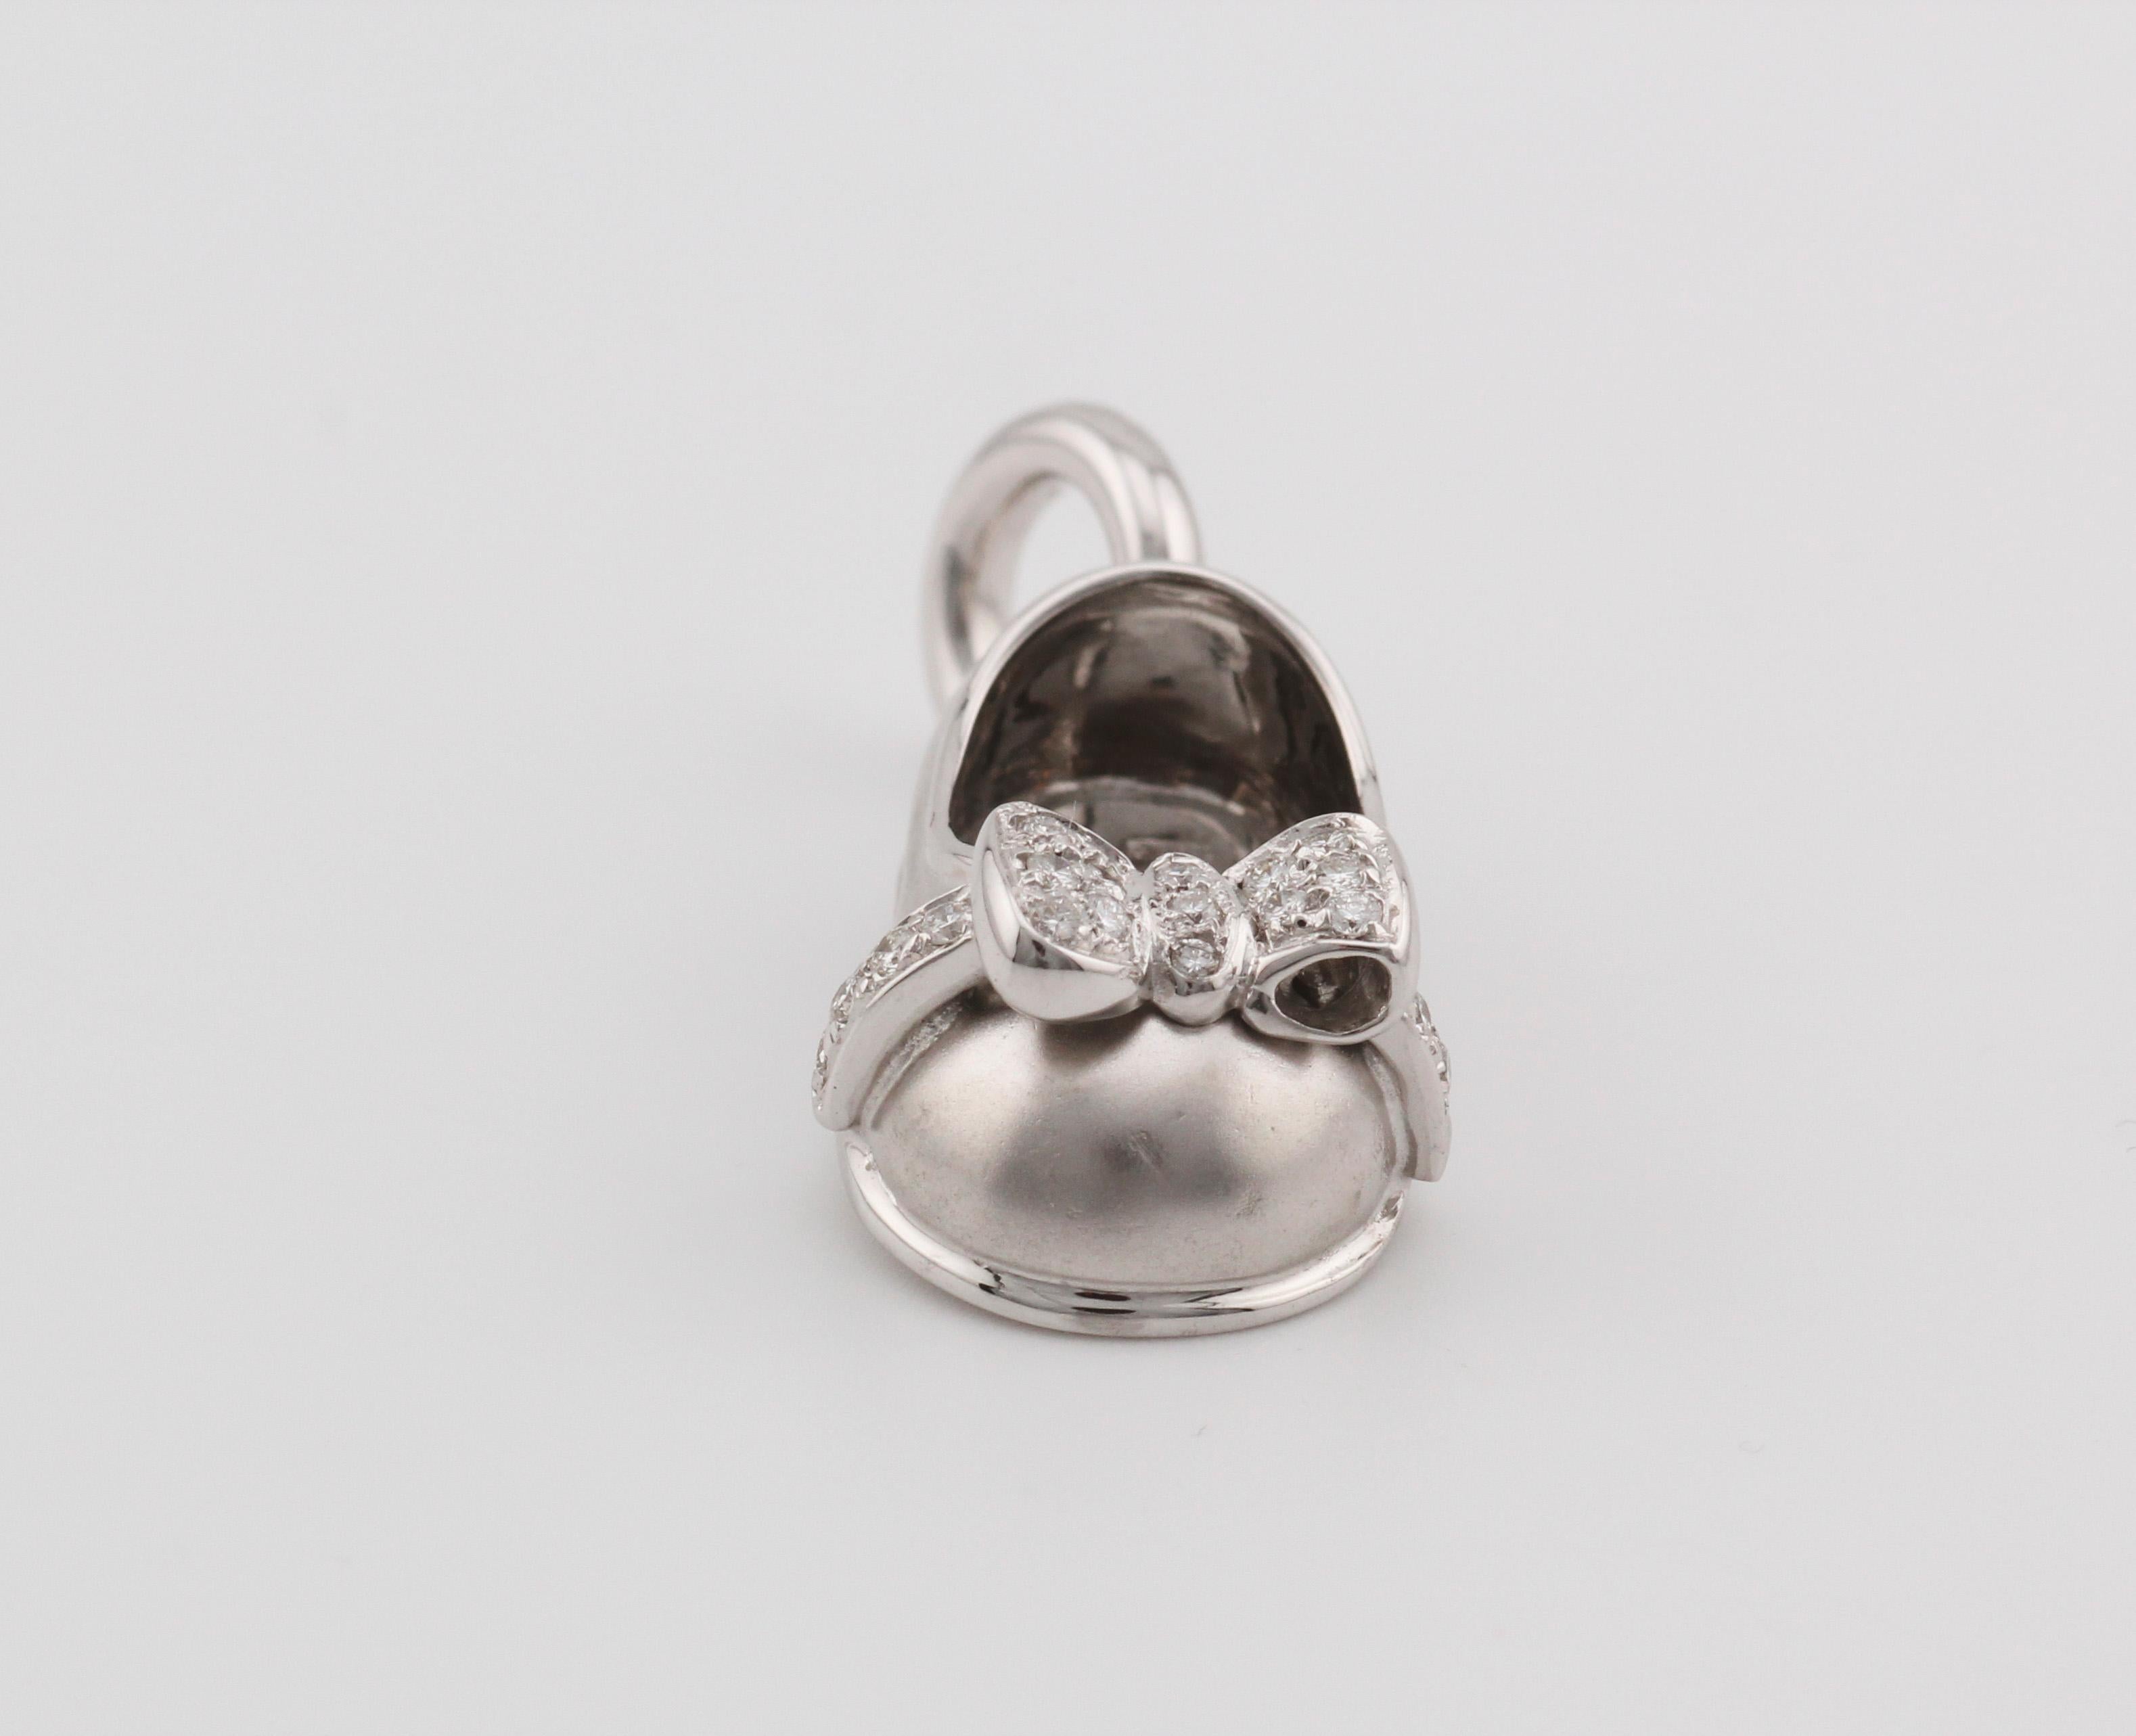 Aaron Basha Diamond 18K White Gold Baby Girl Shoe with Diamond Bow Charm Pendant For Sale 2